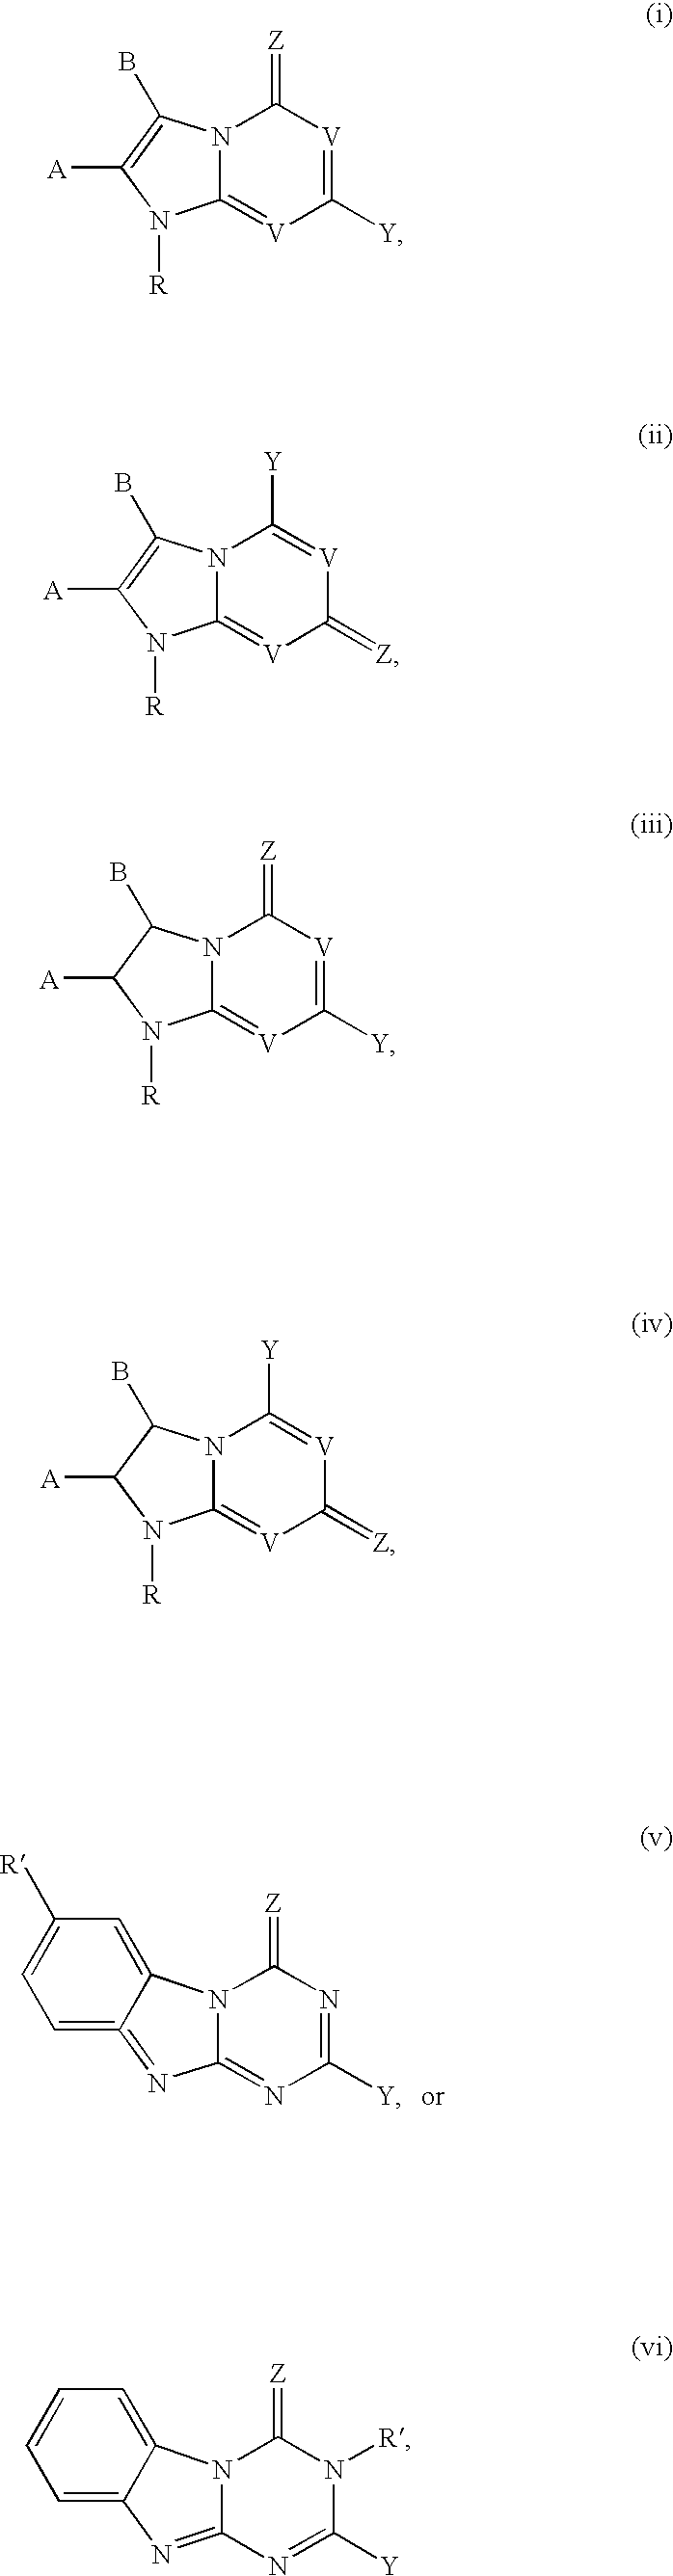 5-Aza-7-deazapurine derivatives for treating Flaviviridae